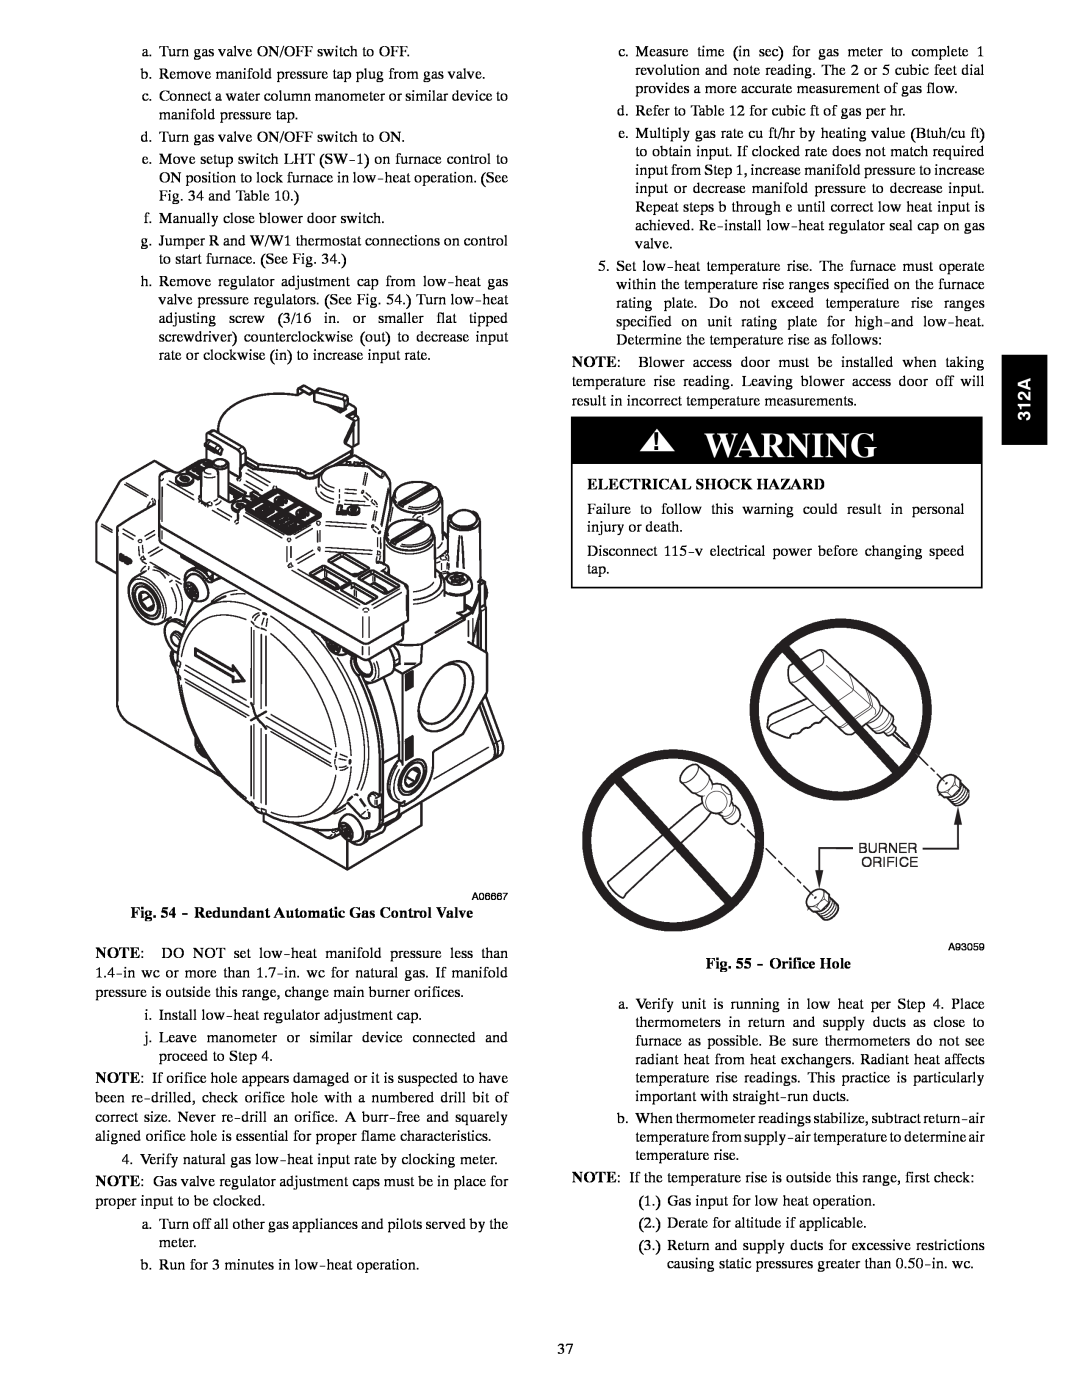 Bryant 120 instruction manual Redundant Automatic Gas Control Valve, Orifice Hole, Electrical Shock Hazard 